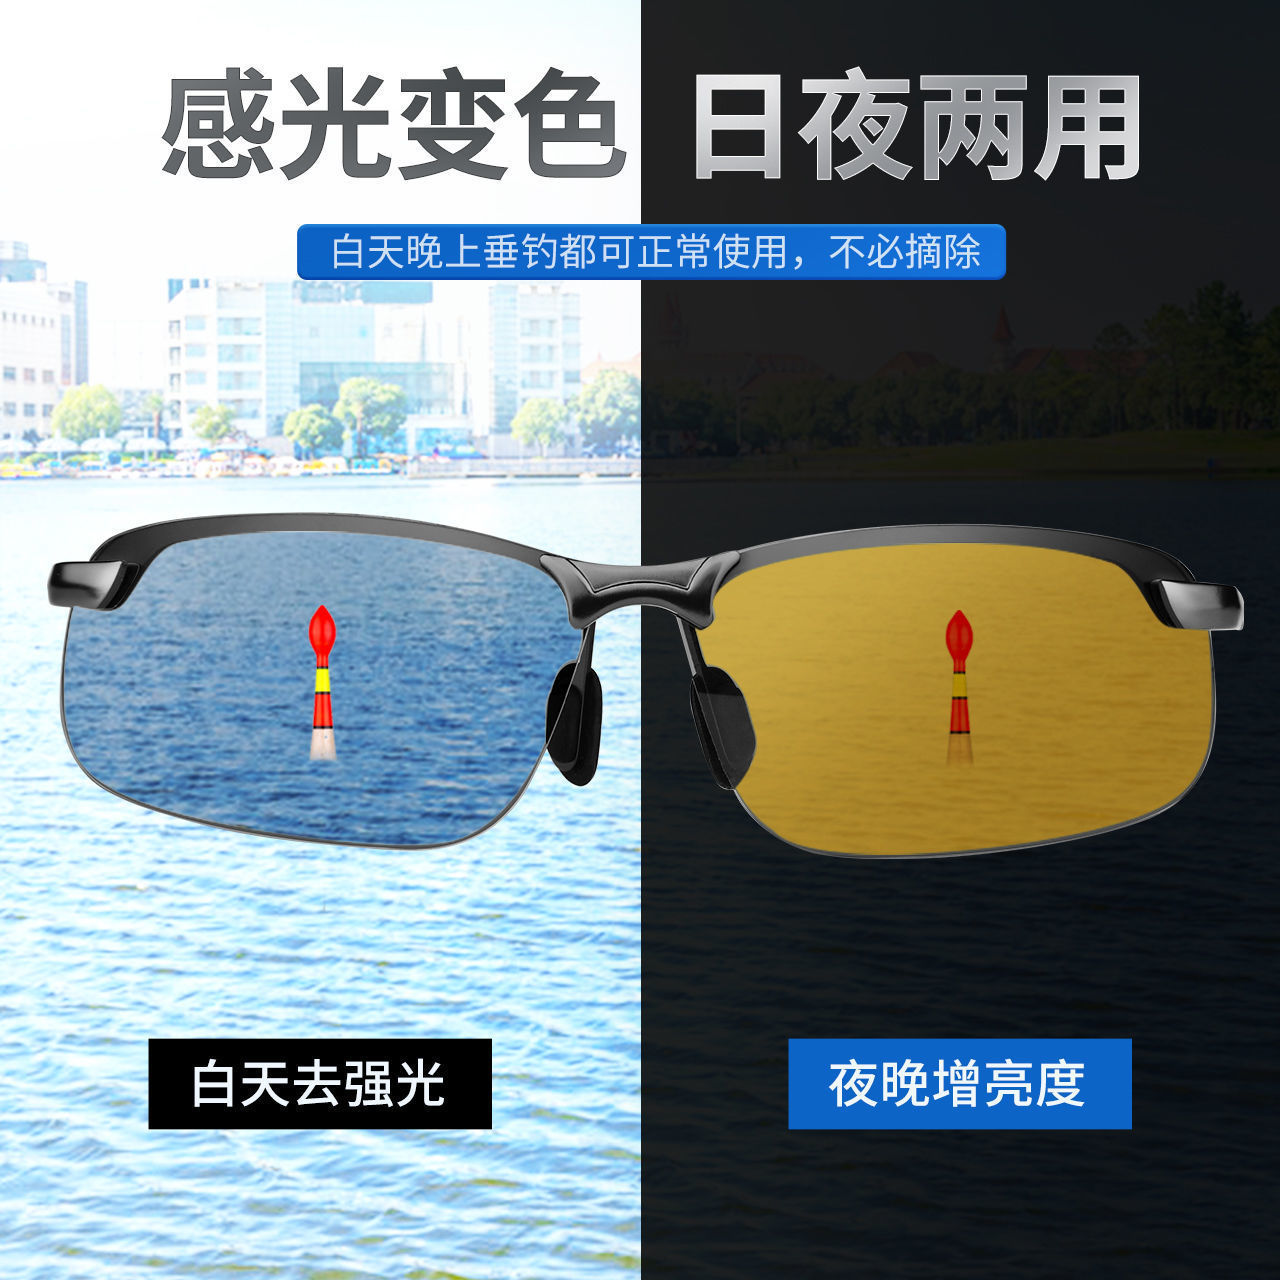 Genuine Men's Sunglasses Fishing New Color Changing Sunglasses Male Polarized Glasses Driving Driving Glasses Korean Night Vision Goggles